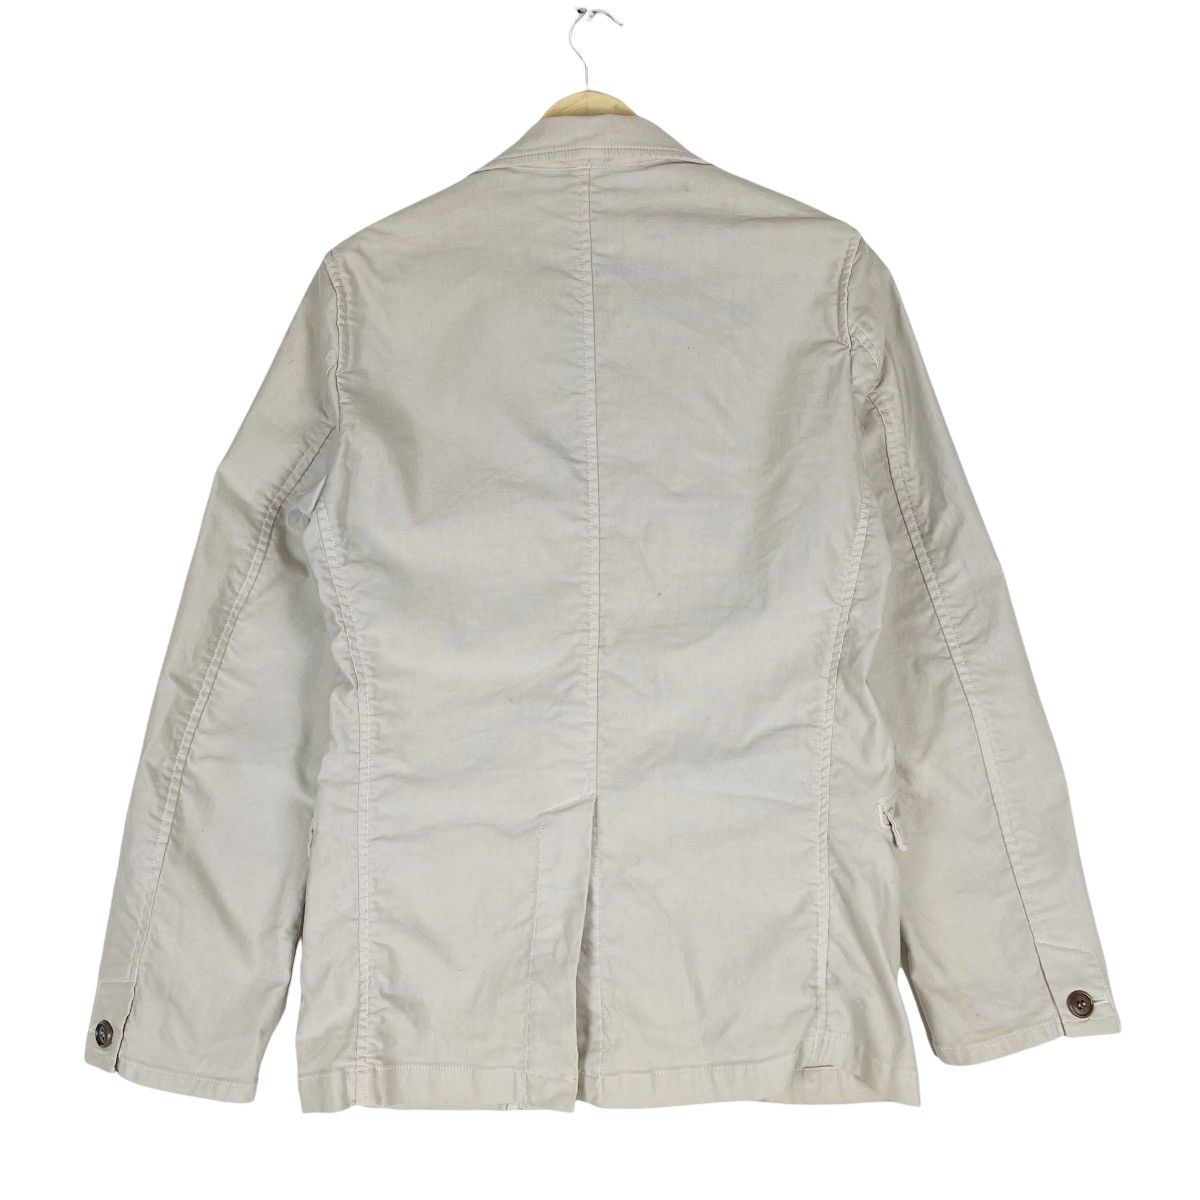 🔥HR Market Japan Workwear Jacket - 10